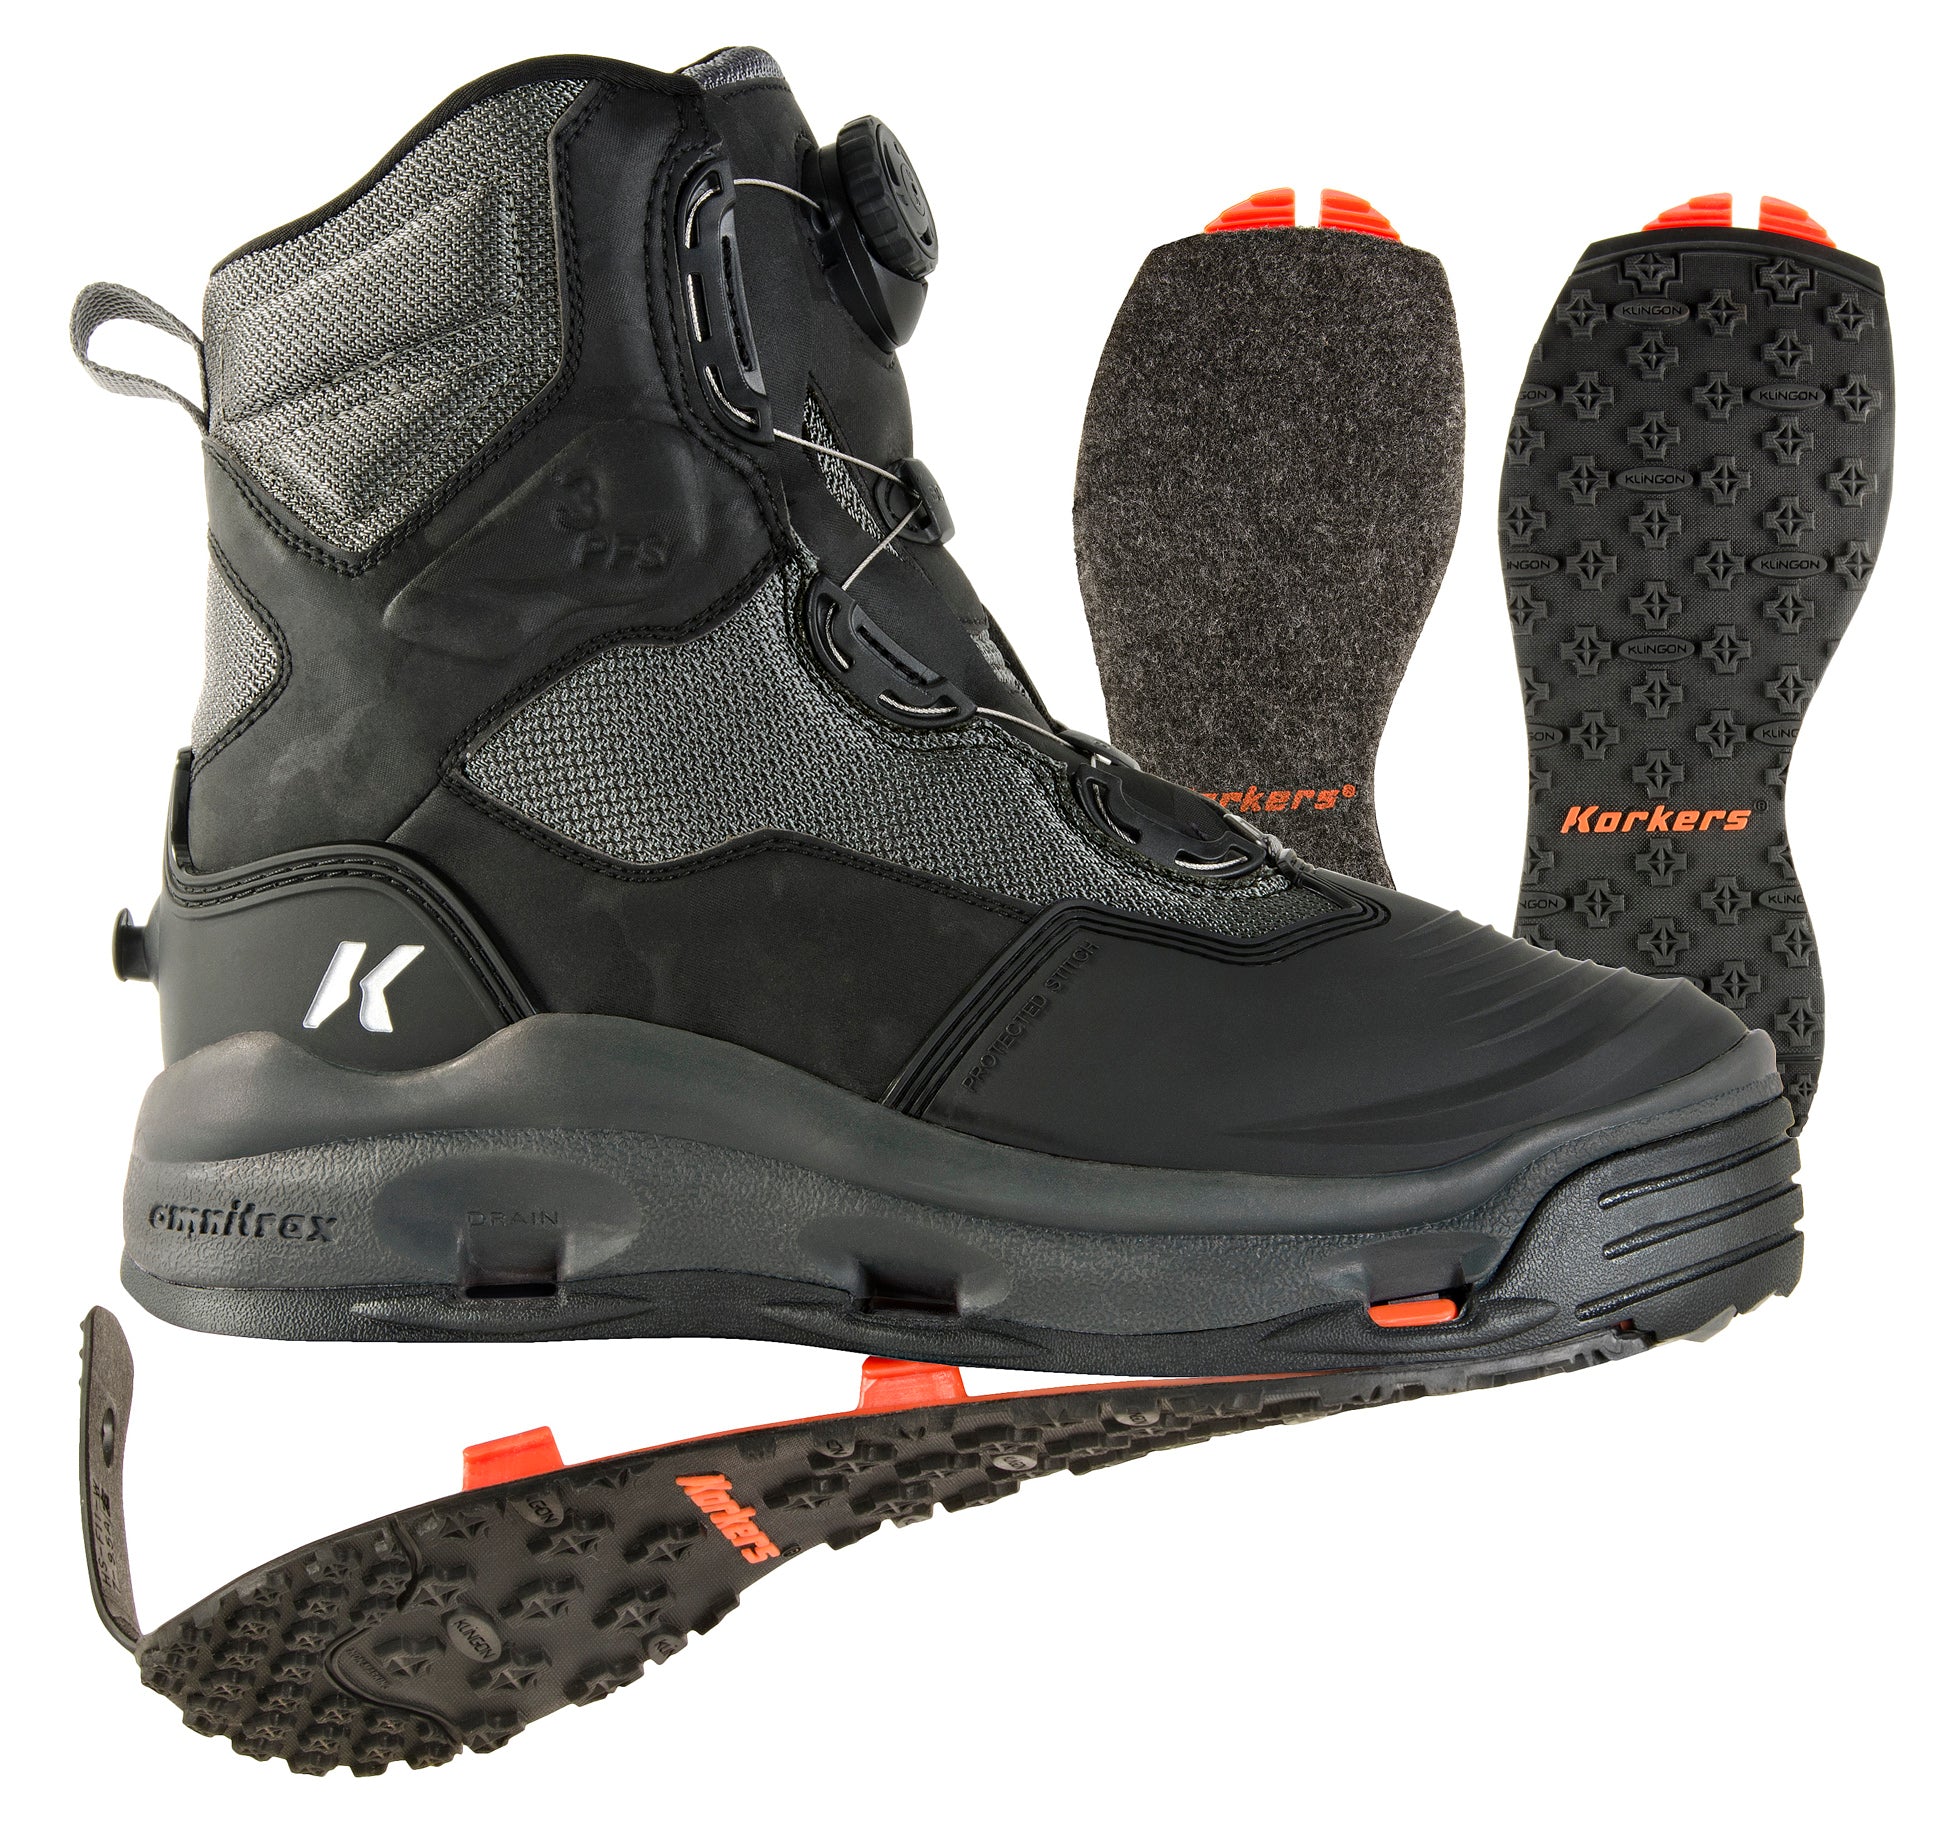 Orvis Encounter Wading Boots - Size 15 - Felt